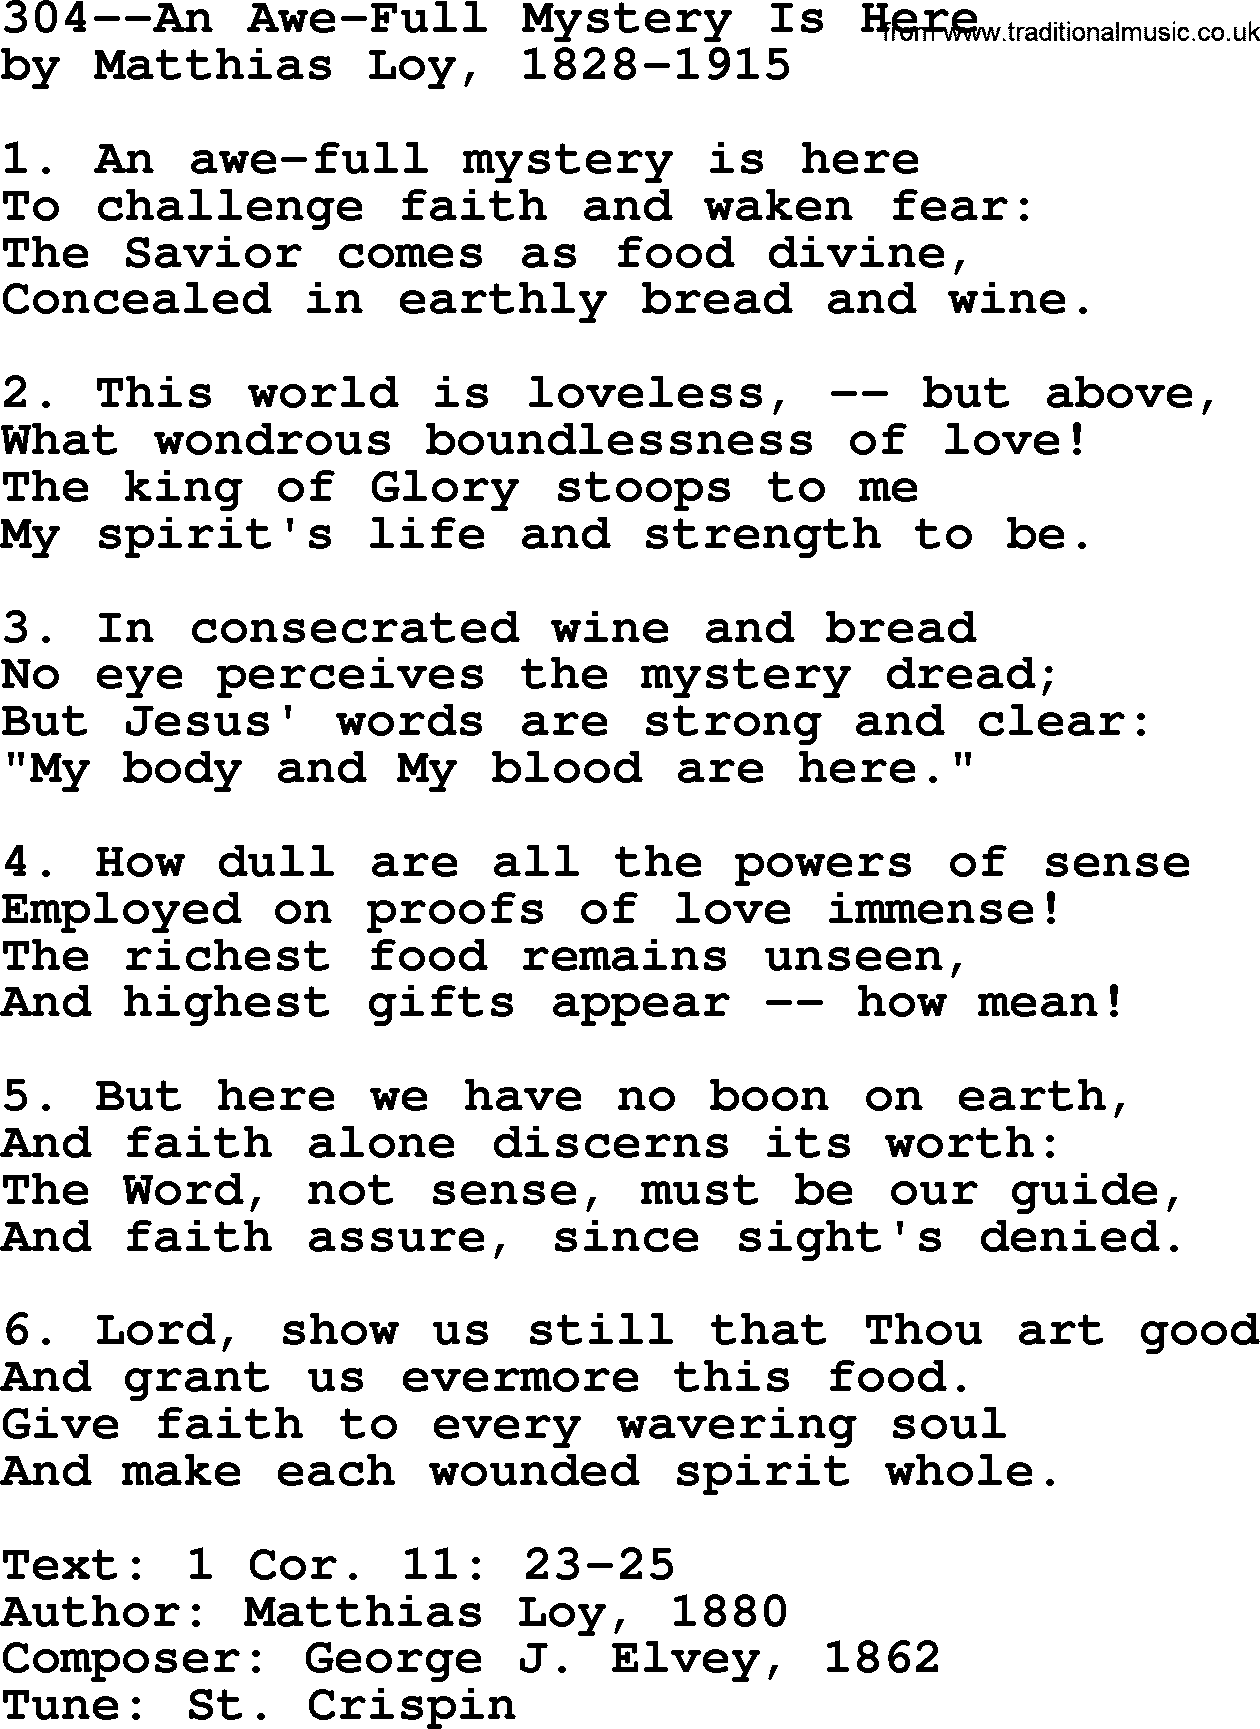 Lutheran Hymn: 304--An Awe-Full Mystery Is Here.txt lyrics with PDF